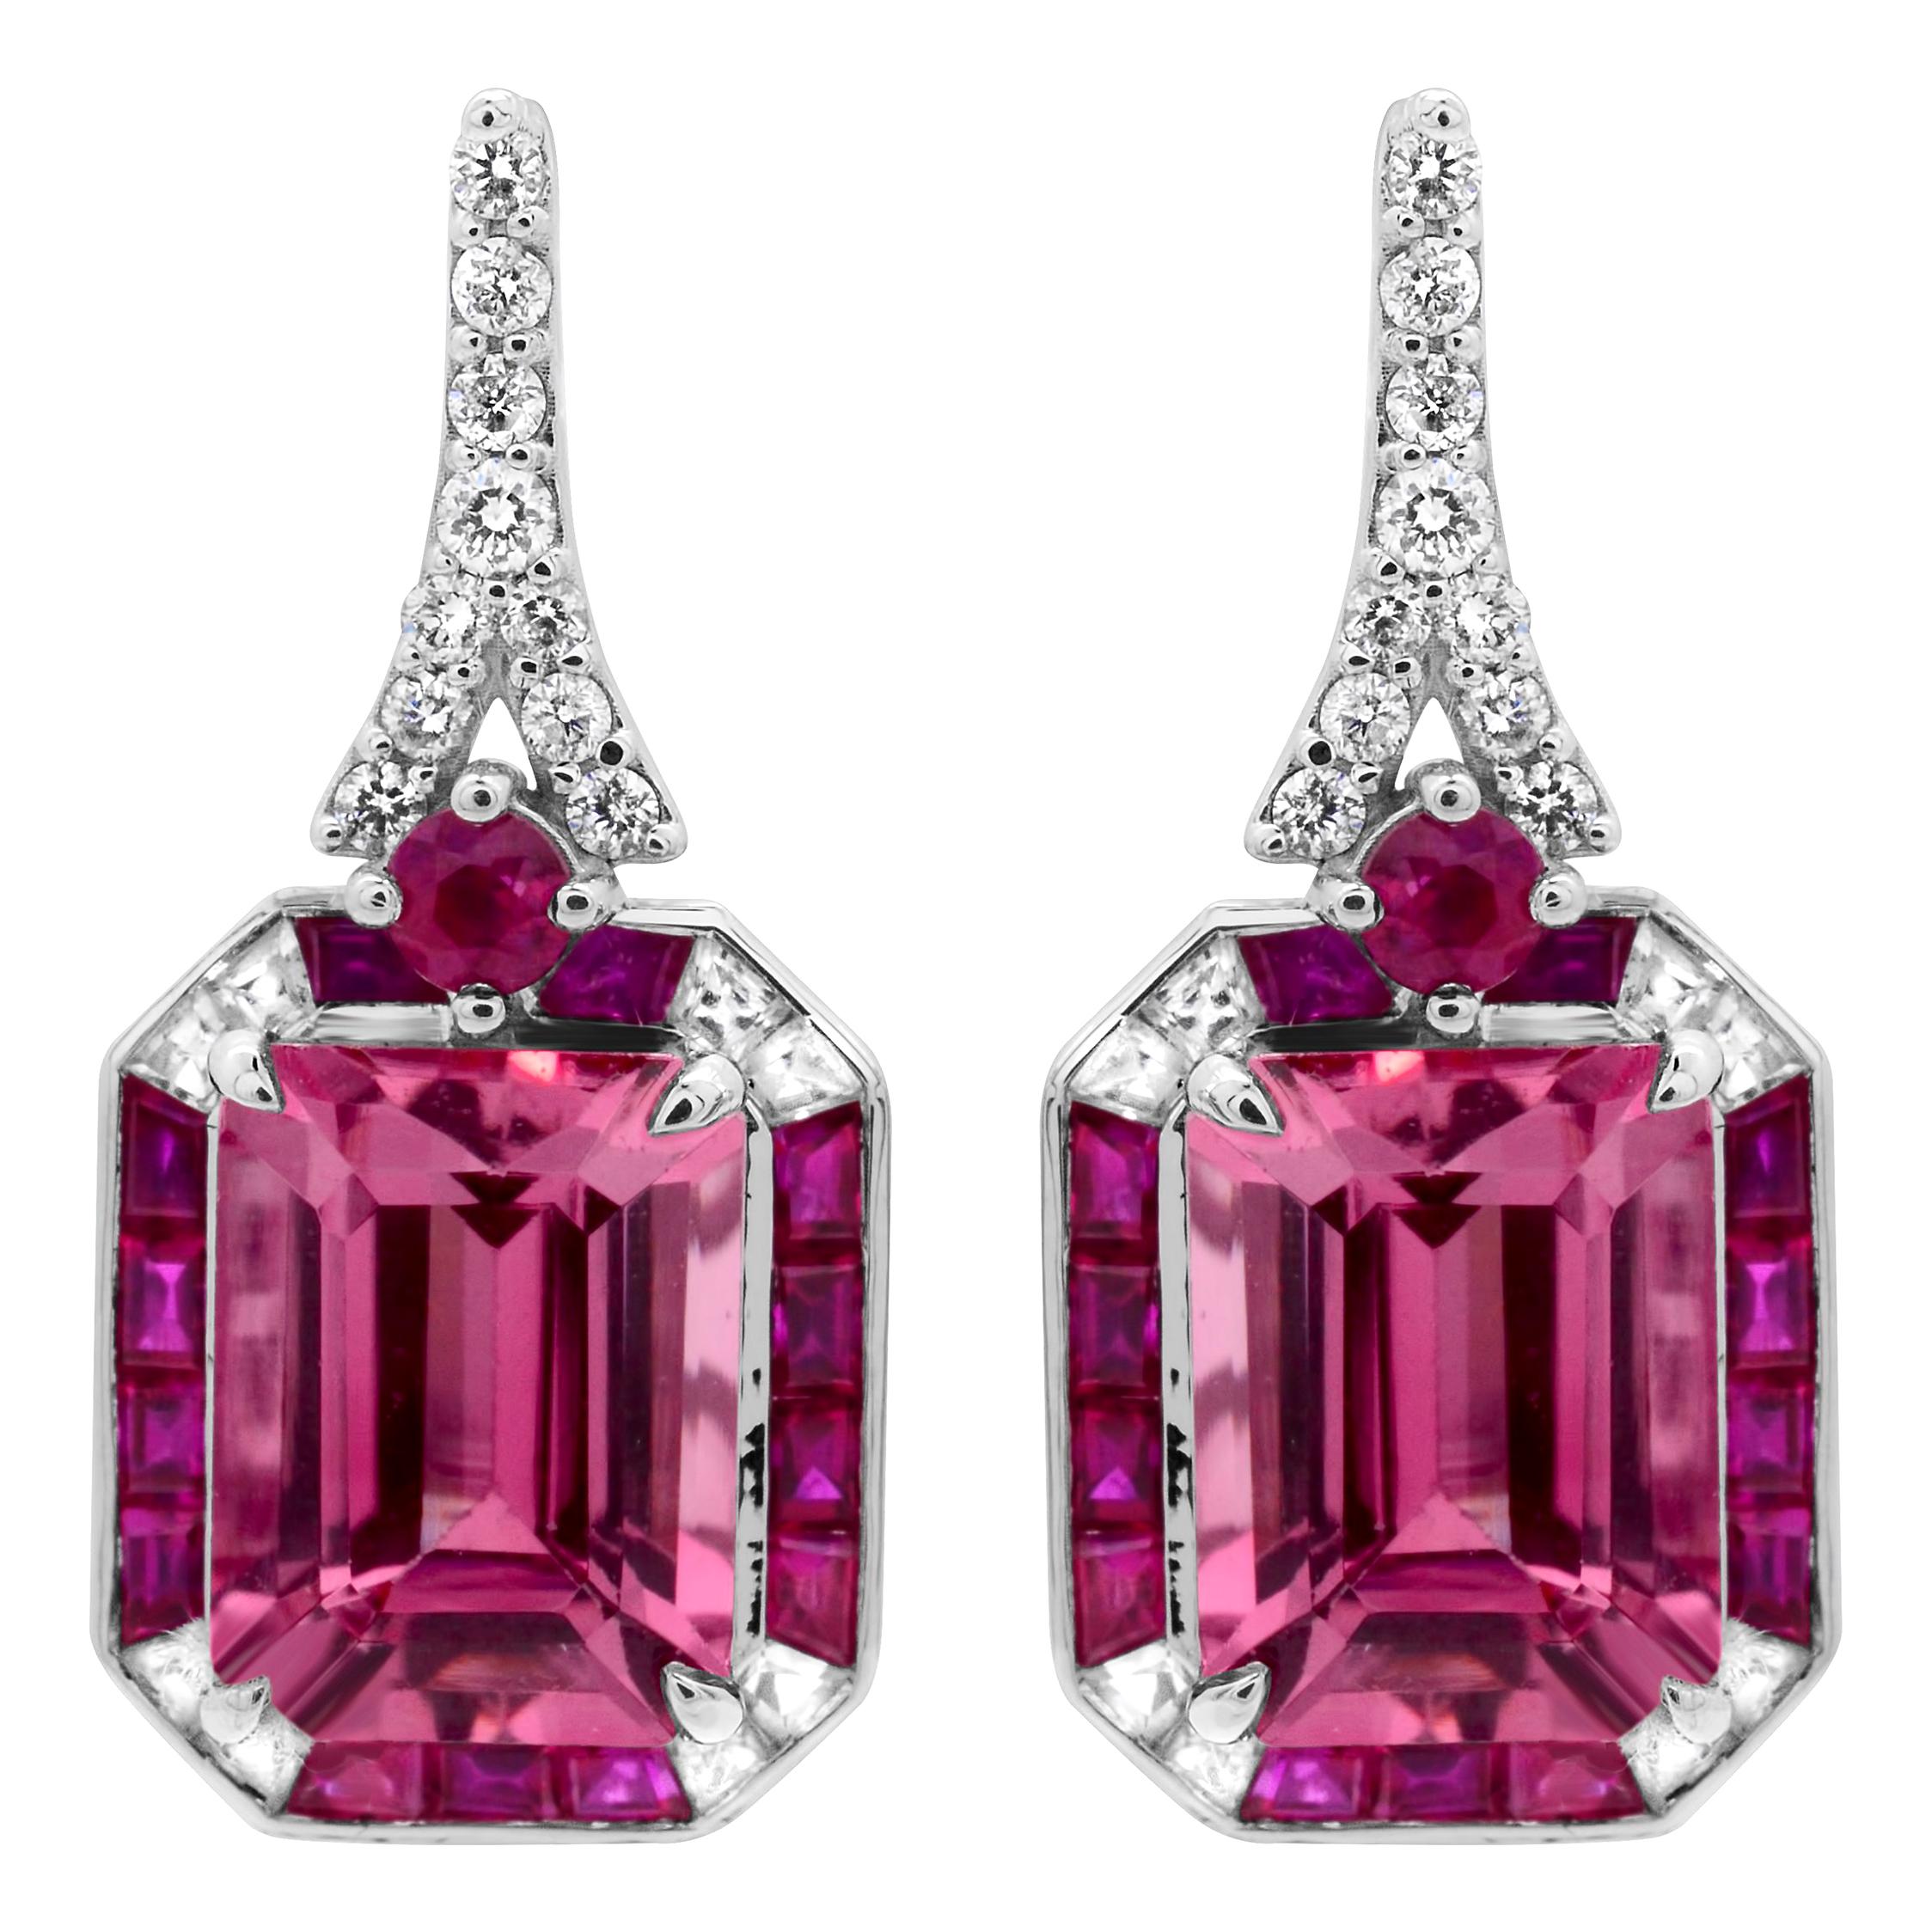 IGL Certified 2.32 Carat Emerald Cut Pink Tourmaline Ruby 14K Cocktail Earrings